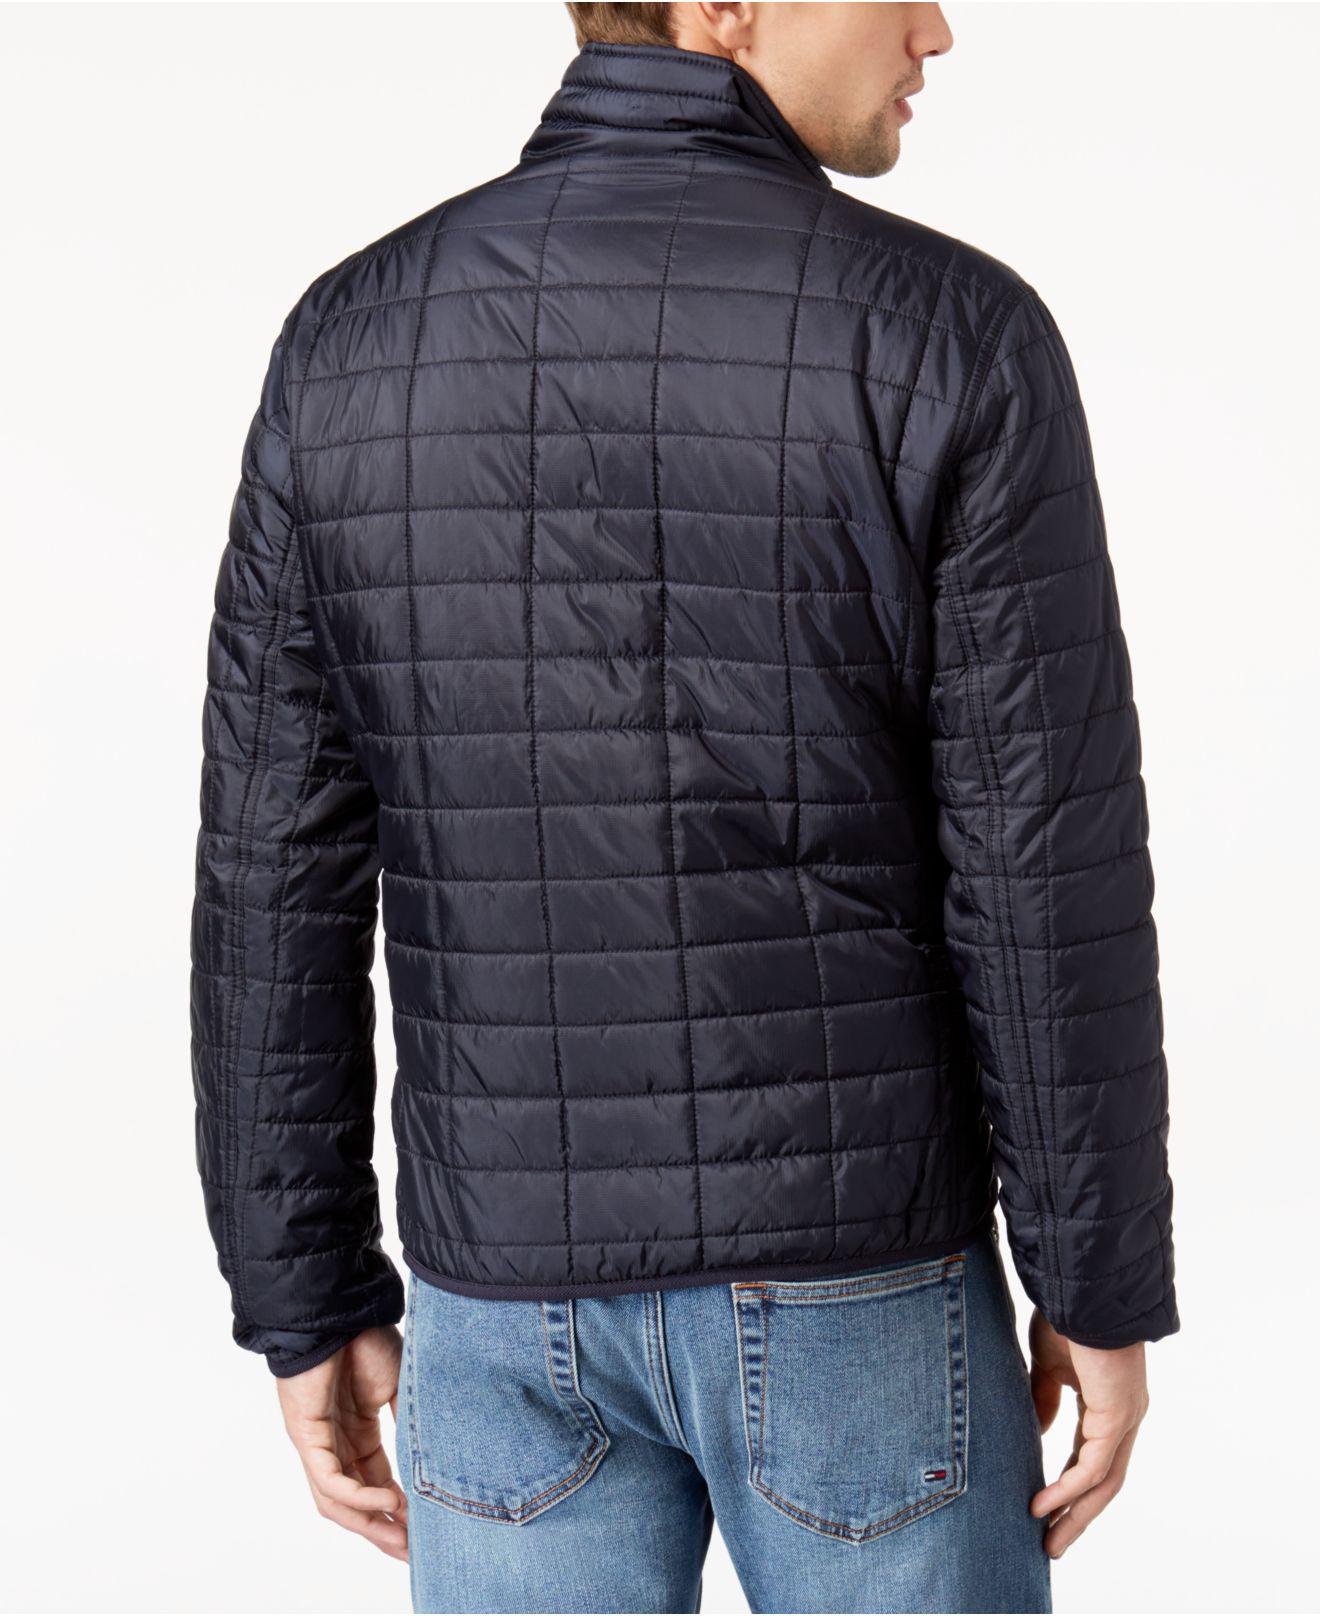 Lyst - Tommy Hilfiger Platinum Insulator Quilted Jacket in Orange for Men